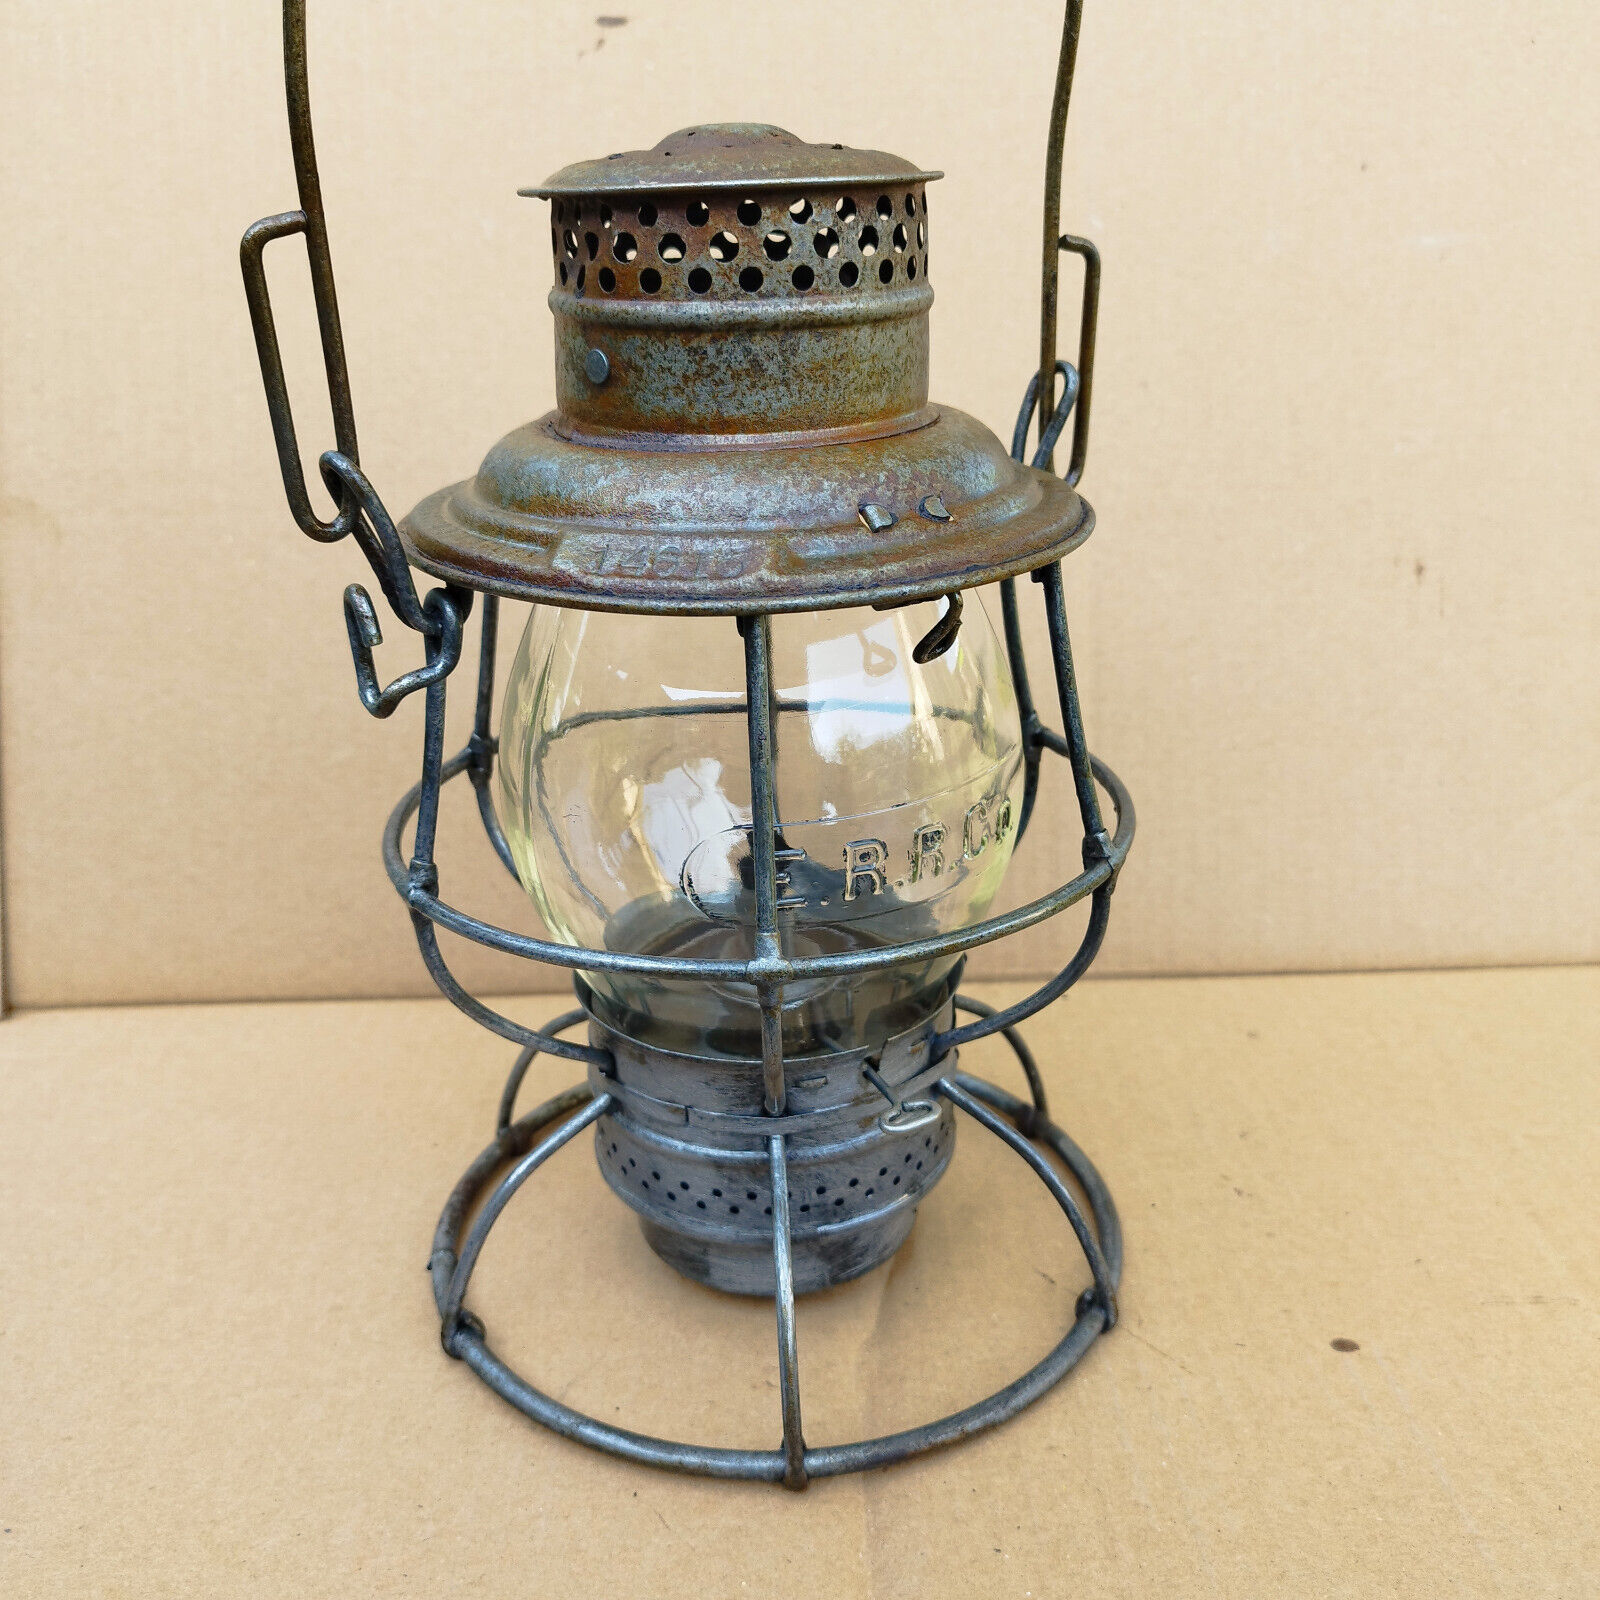  Antique Lantern Kerosene Train ADLAKE glass E.R.R.Co. Old Lamp  Safety Grid